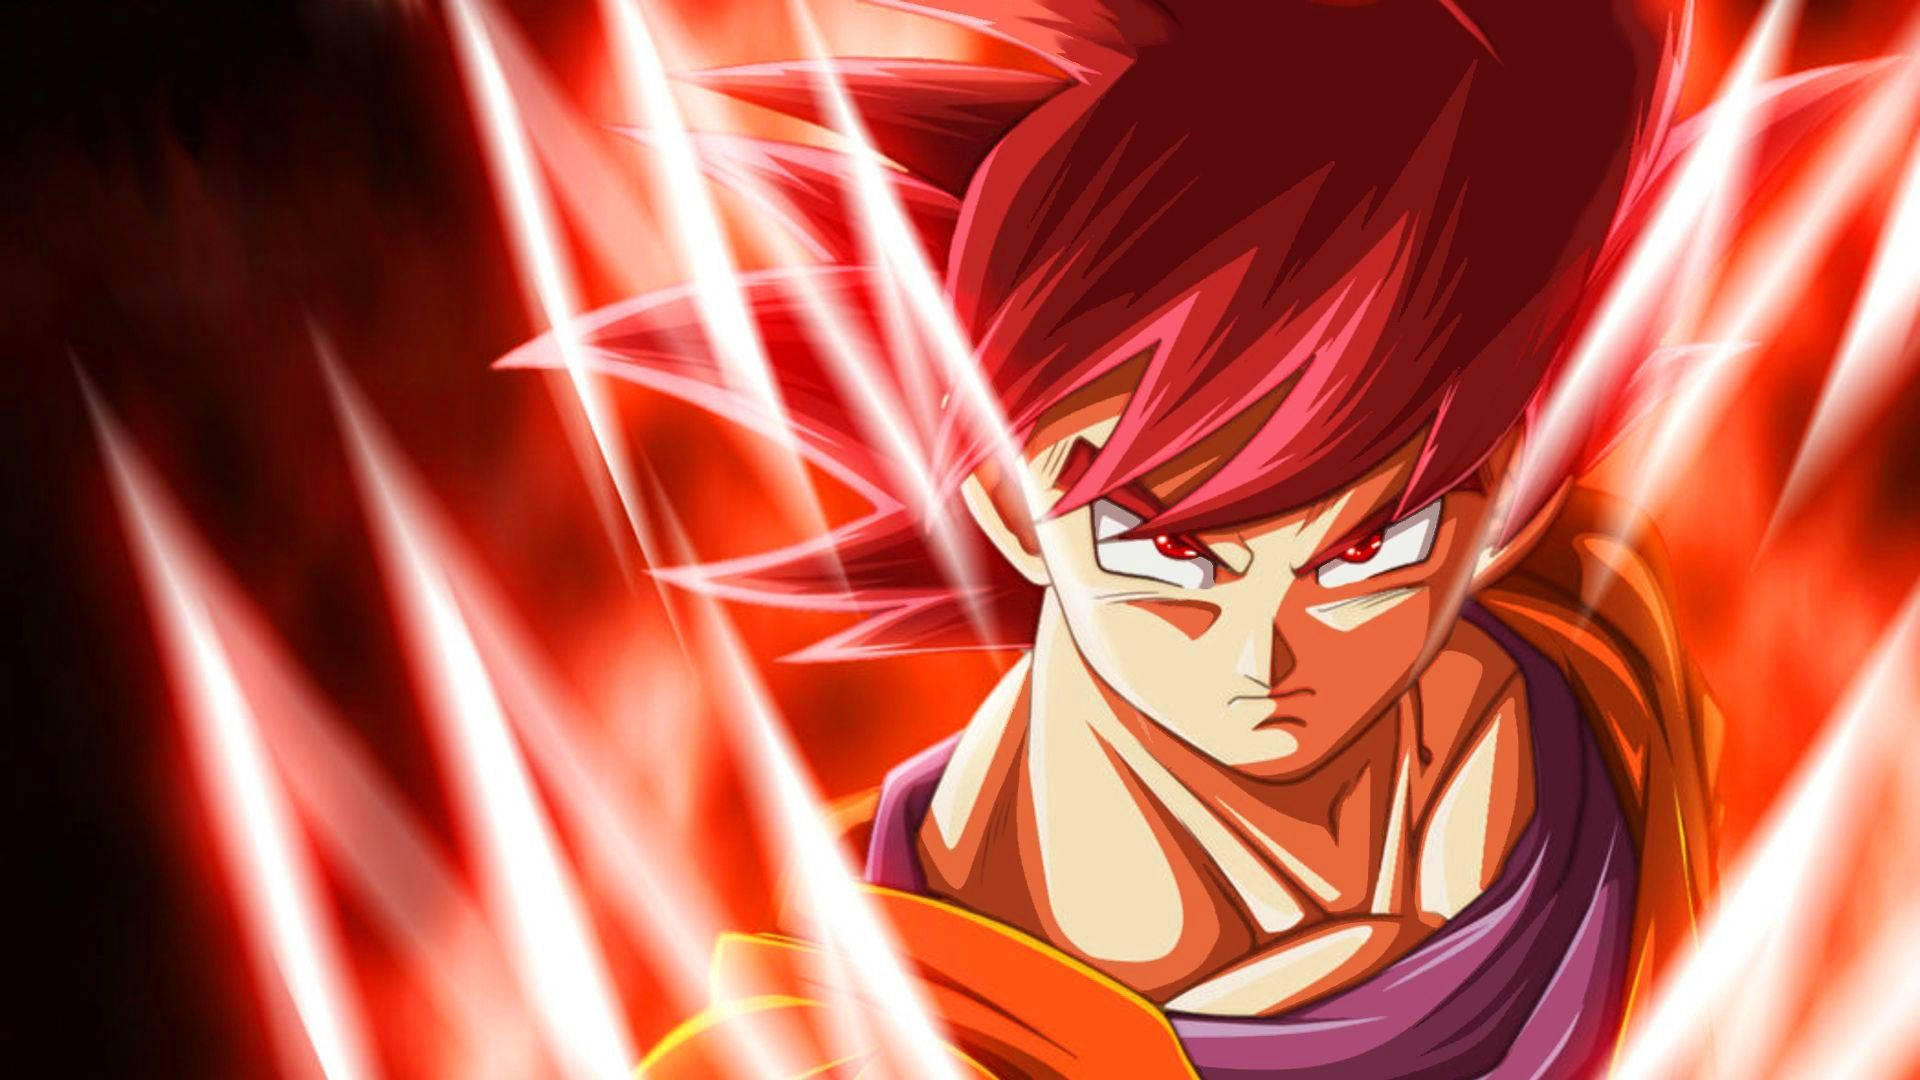 Download Goku Bright Red Kaioken Force | Wallpapers.com